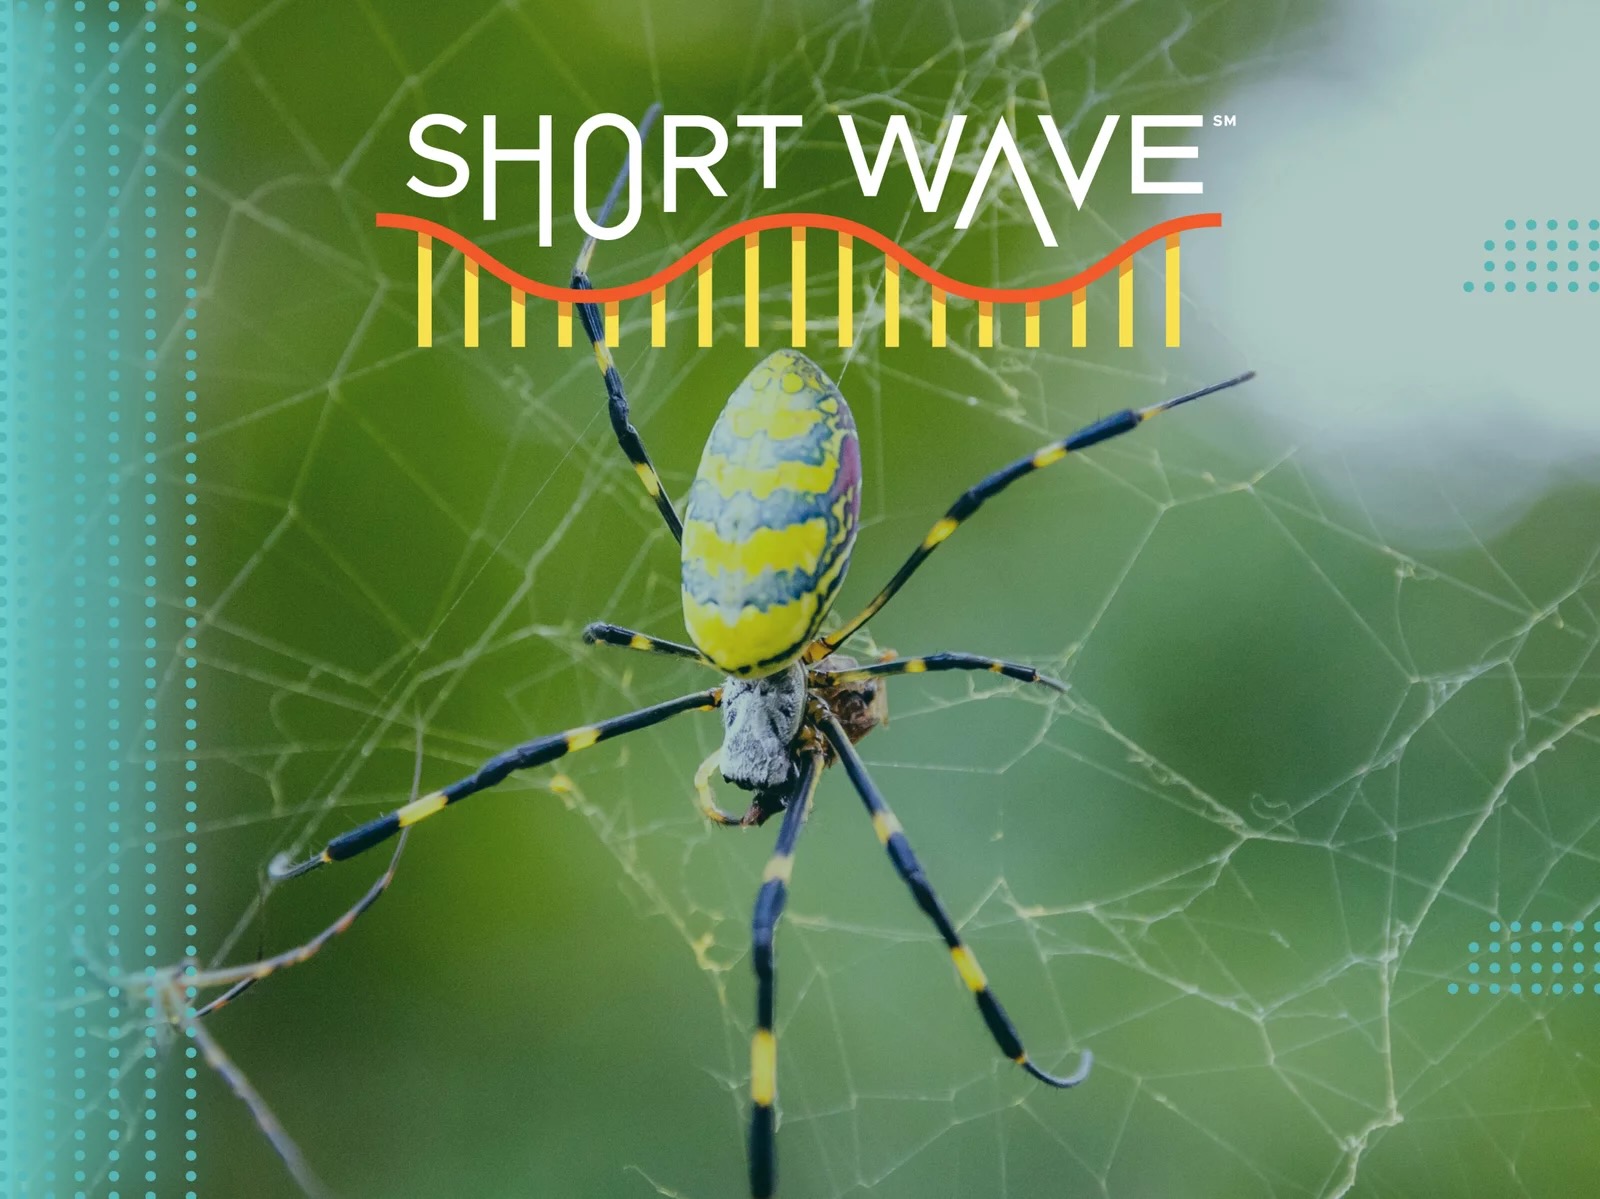 A Joro spider in a web under the Short Wave logo